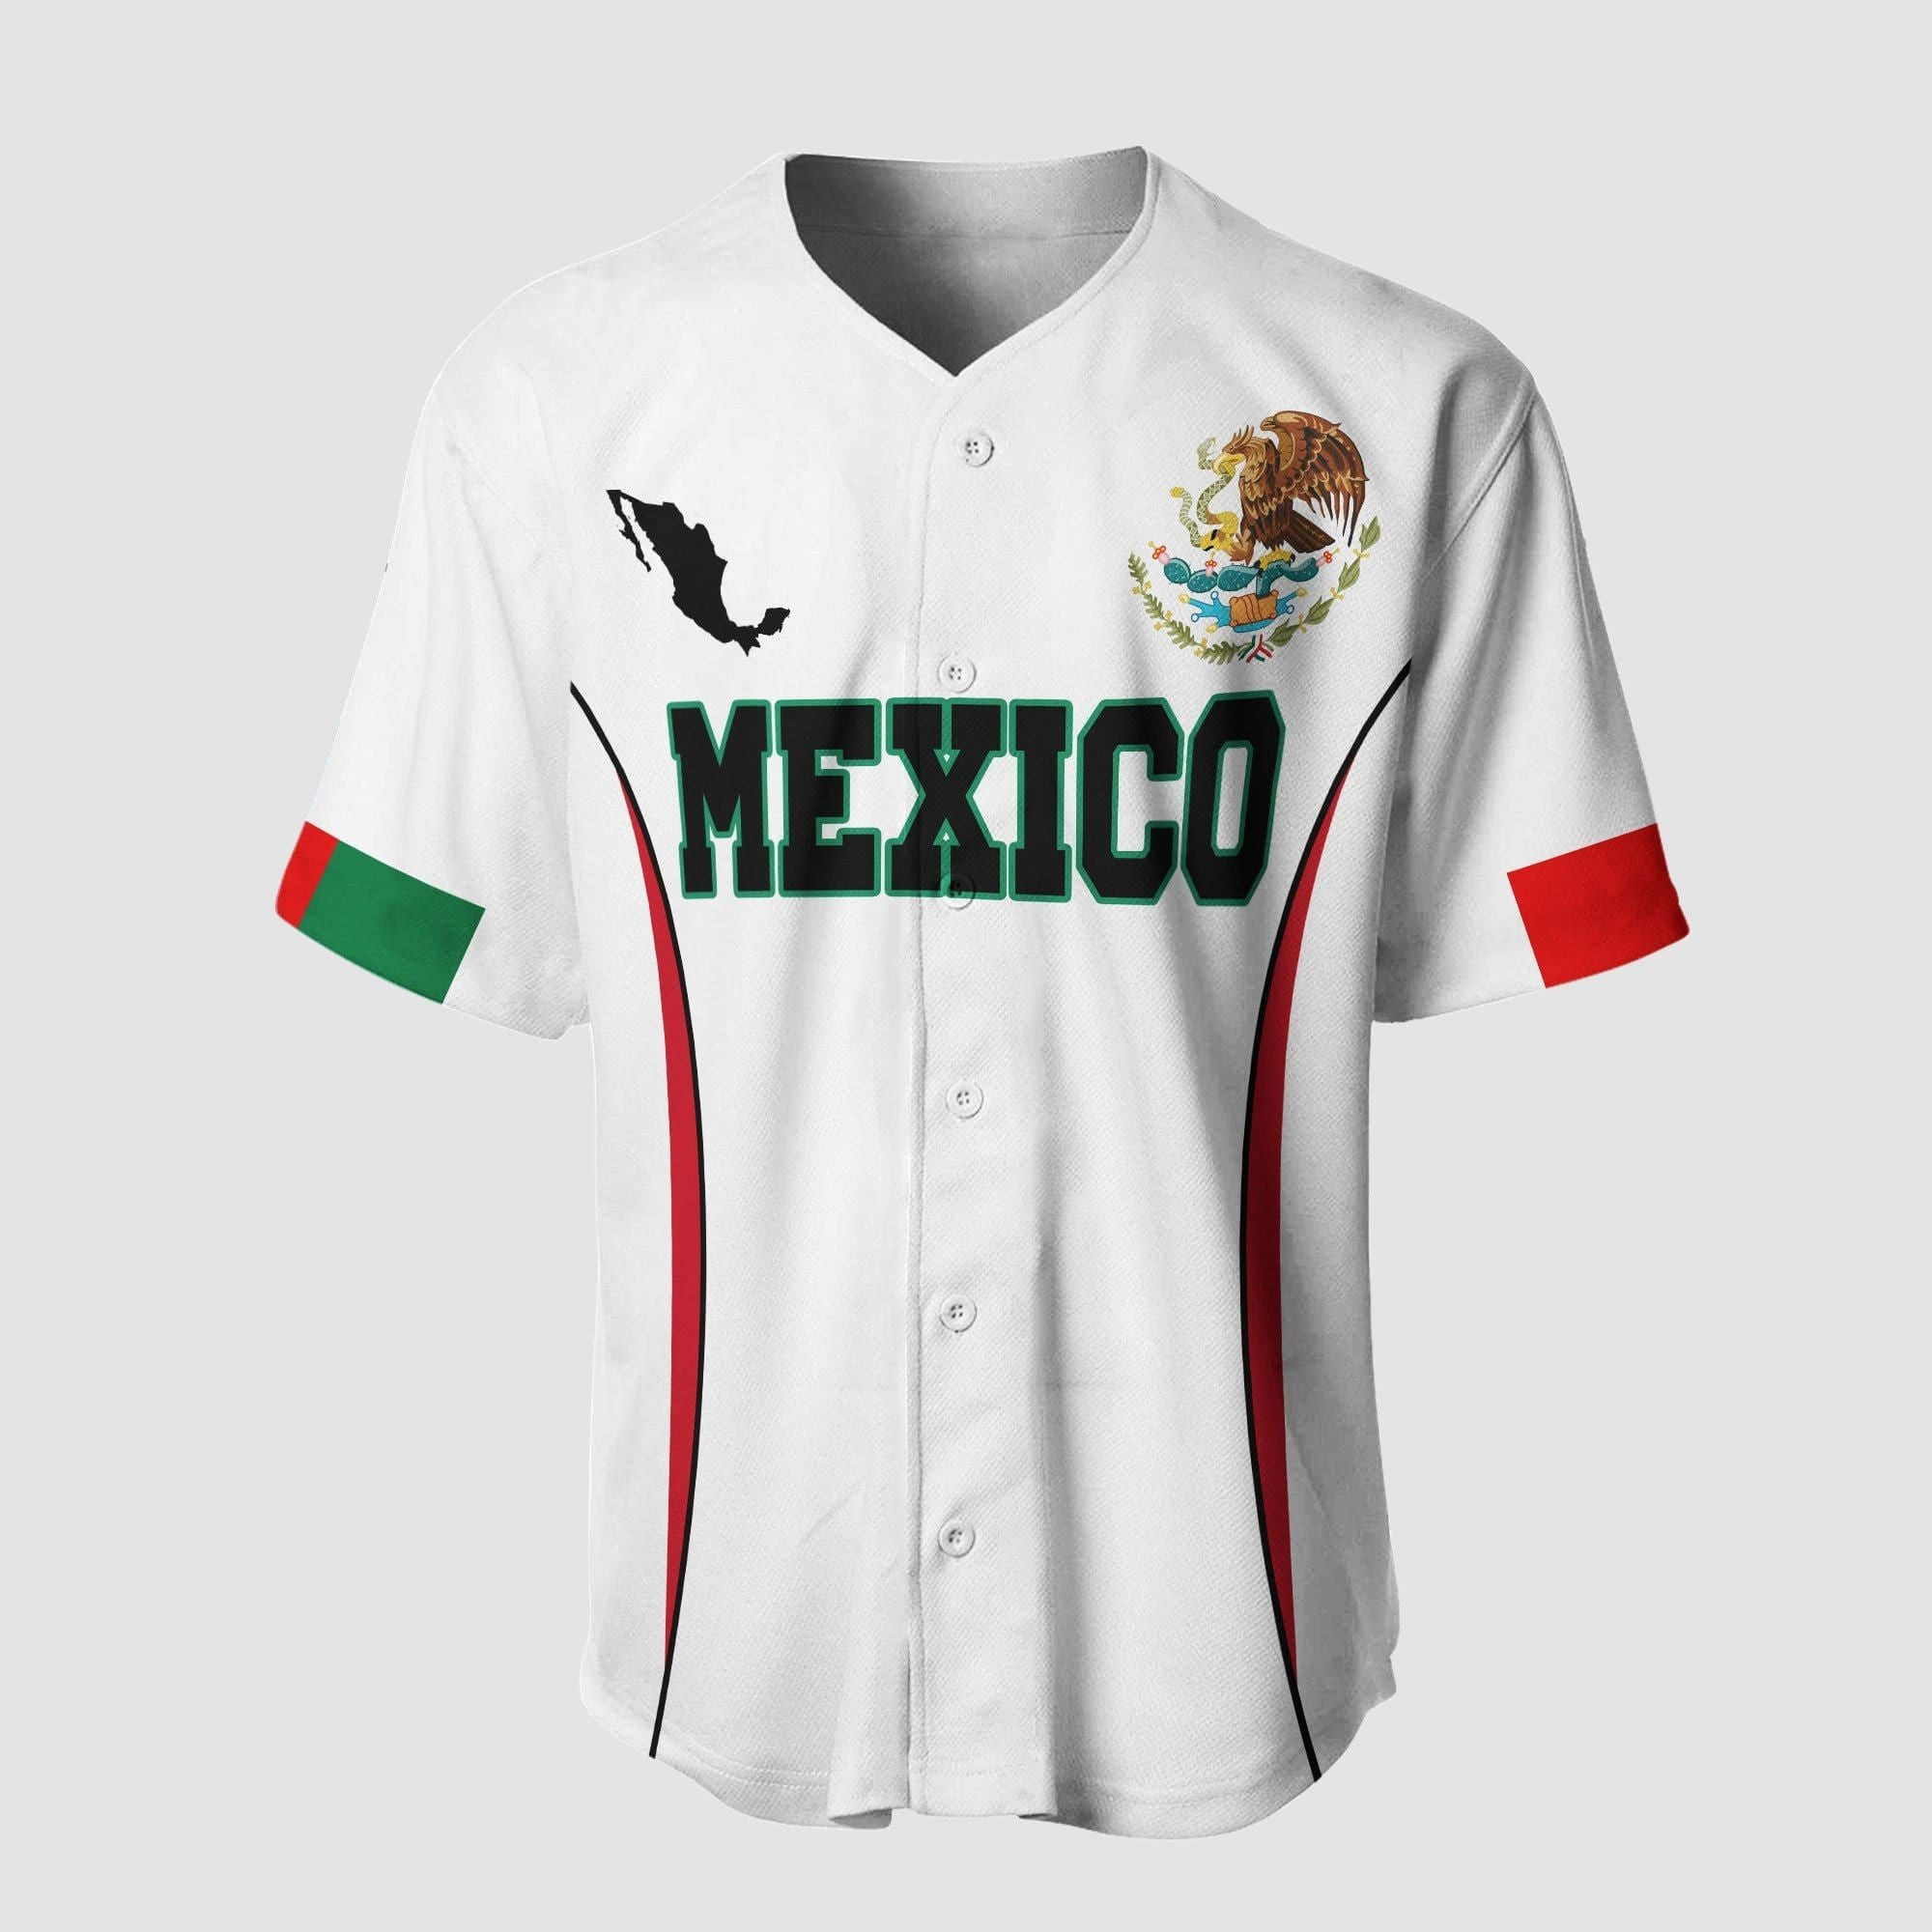 Mexico Skull My Home My Blood Baseball Jersey, Unisex Jersey Shirt for Men Women